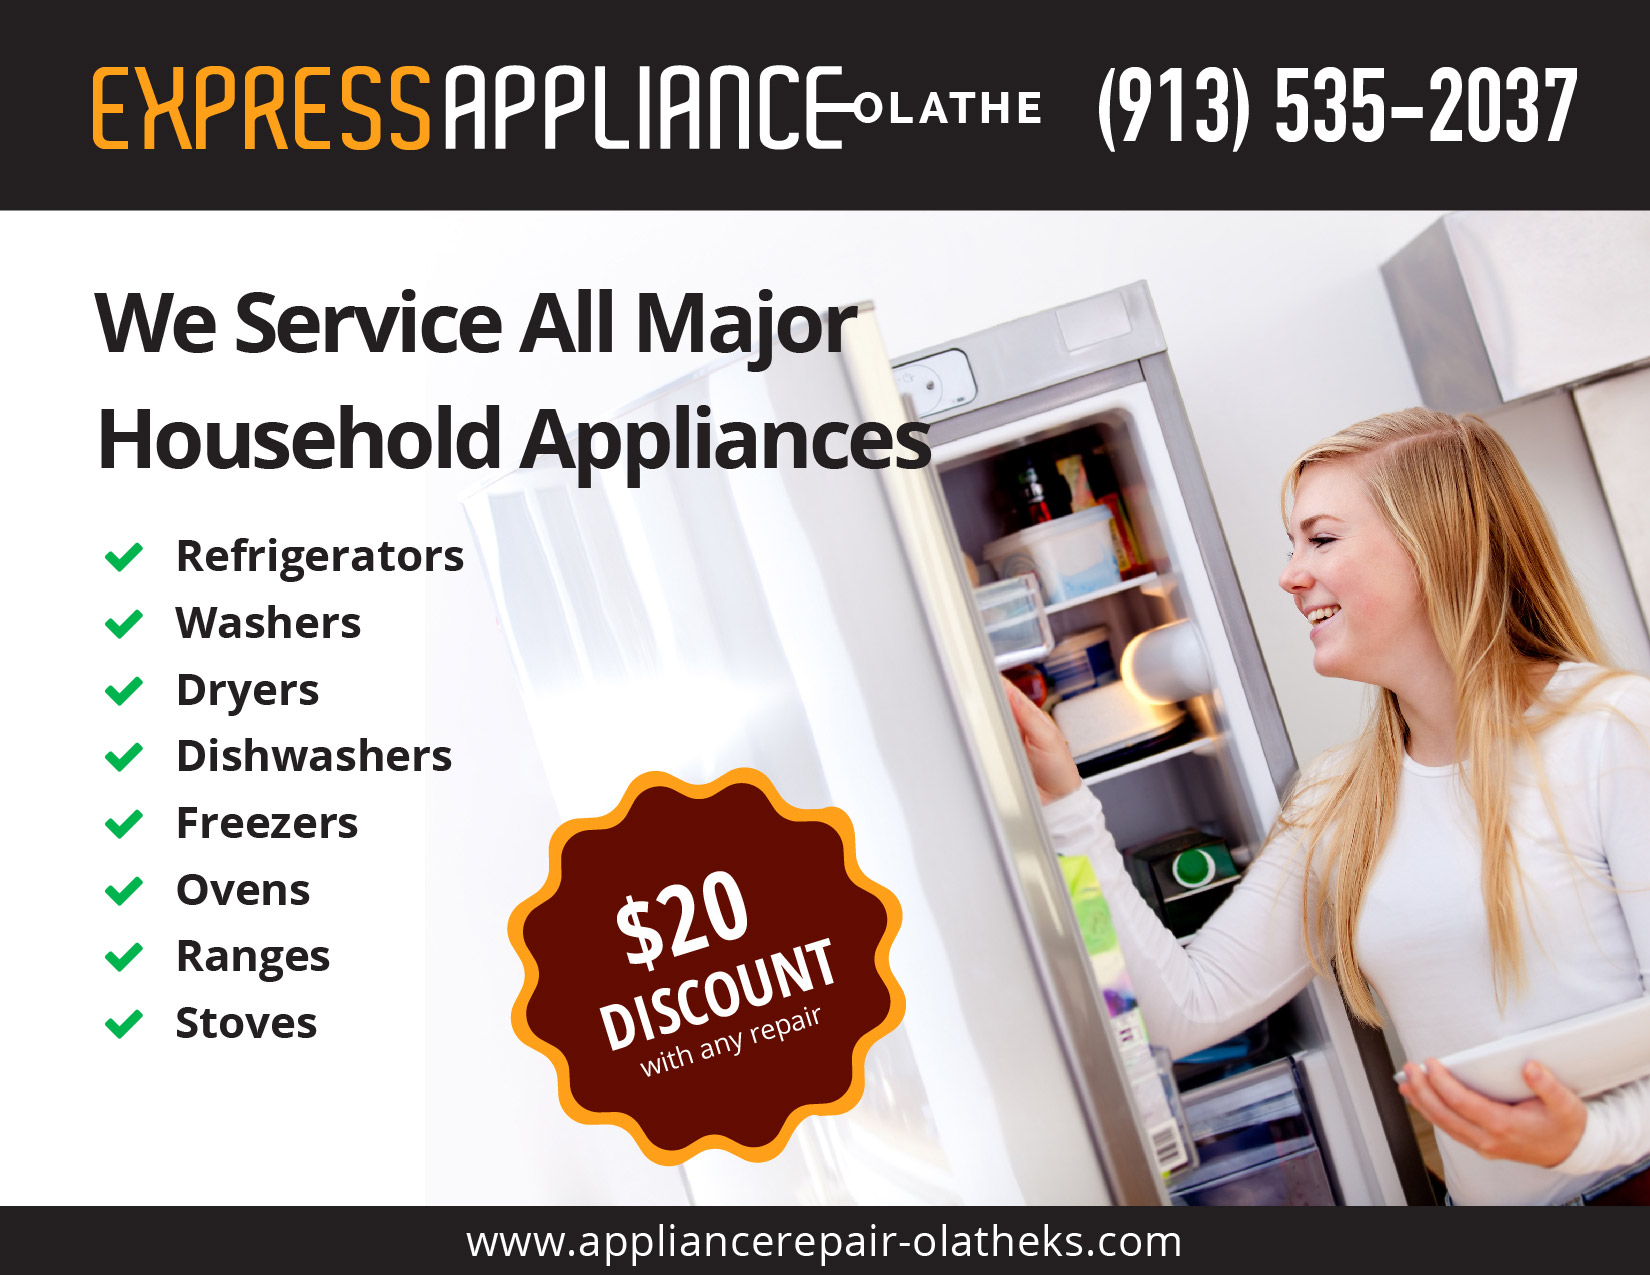 Express Appliance Repair of Olathe